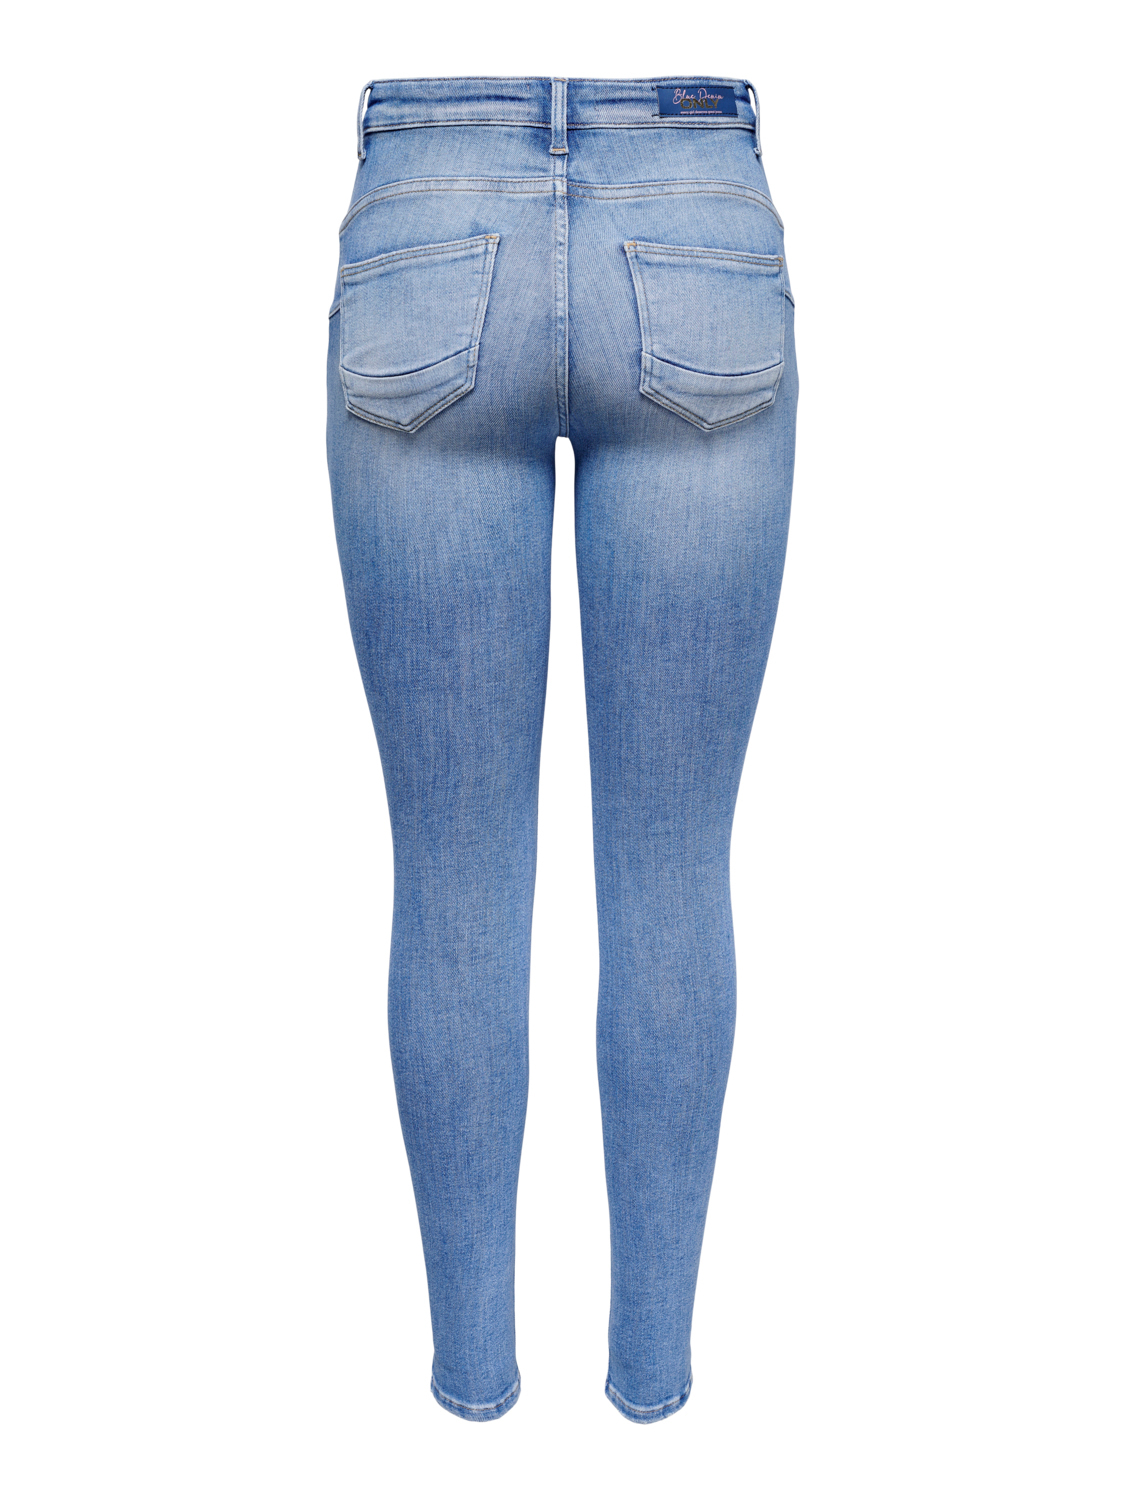 Abbigliamento Donna ONLY Jeans Power in Blu 